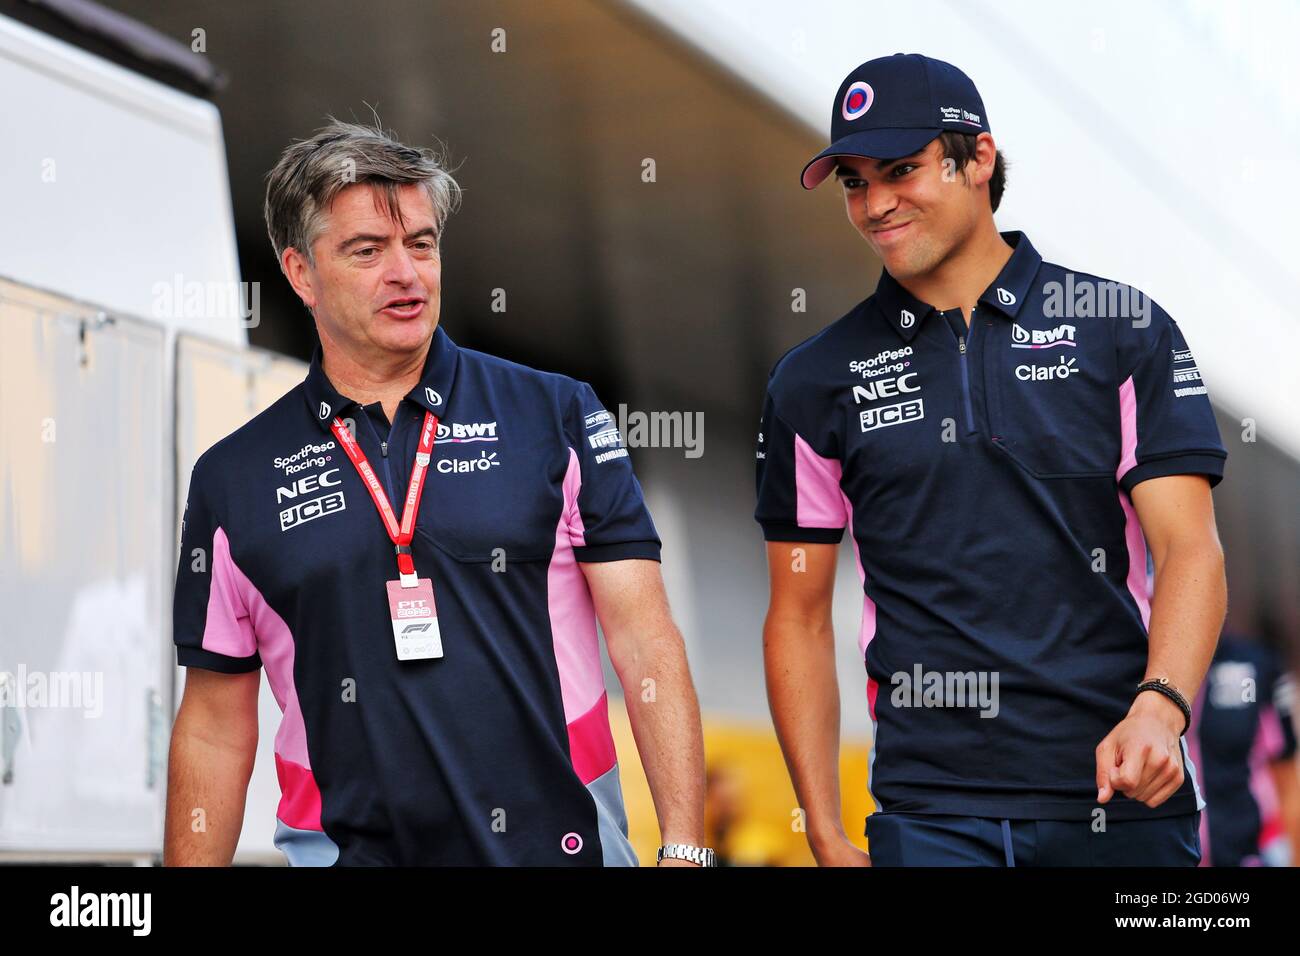 De gauche à droite) : Andy Stevenson (GBR) Racing point F1 Team Manager  avec lance Ret Racing point F1 Team (CDN). Grand Prix de Grande-Bretagne,  vendredi 12 juillet 2019. Silverstone, Angleterre Photo